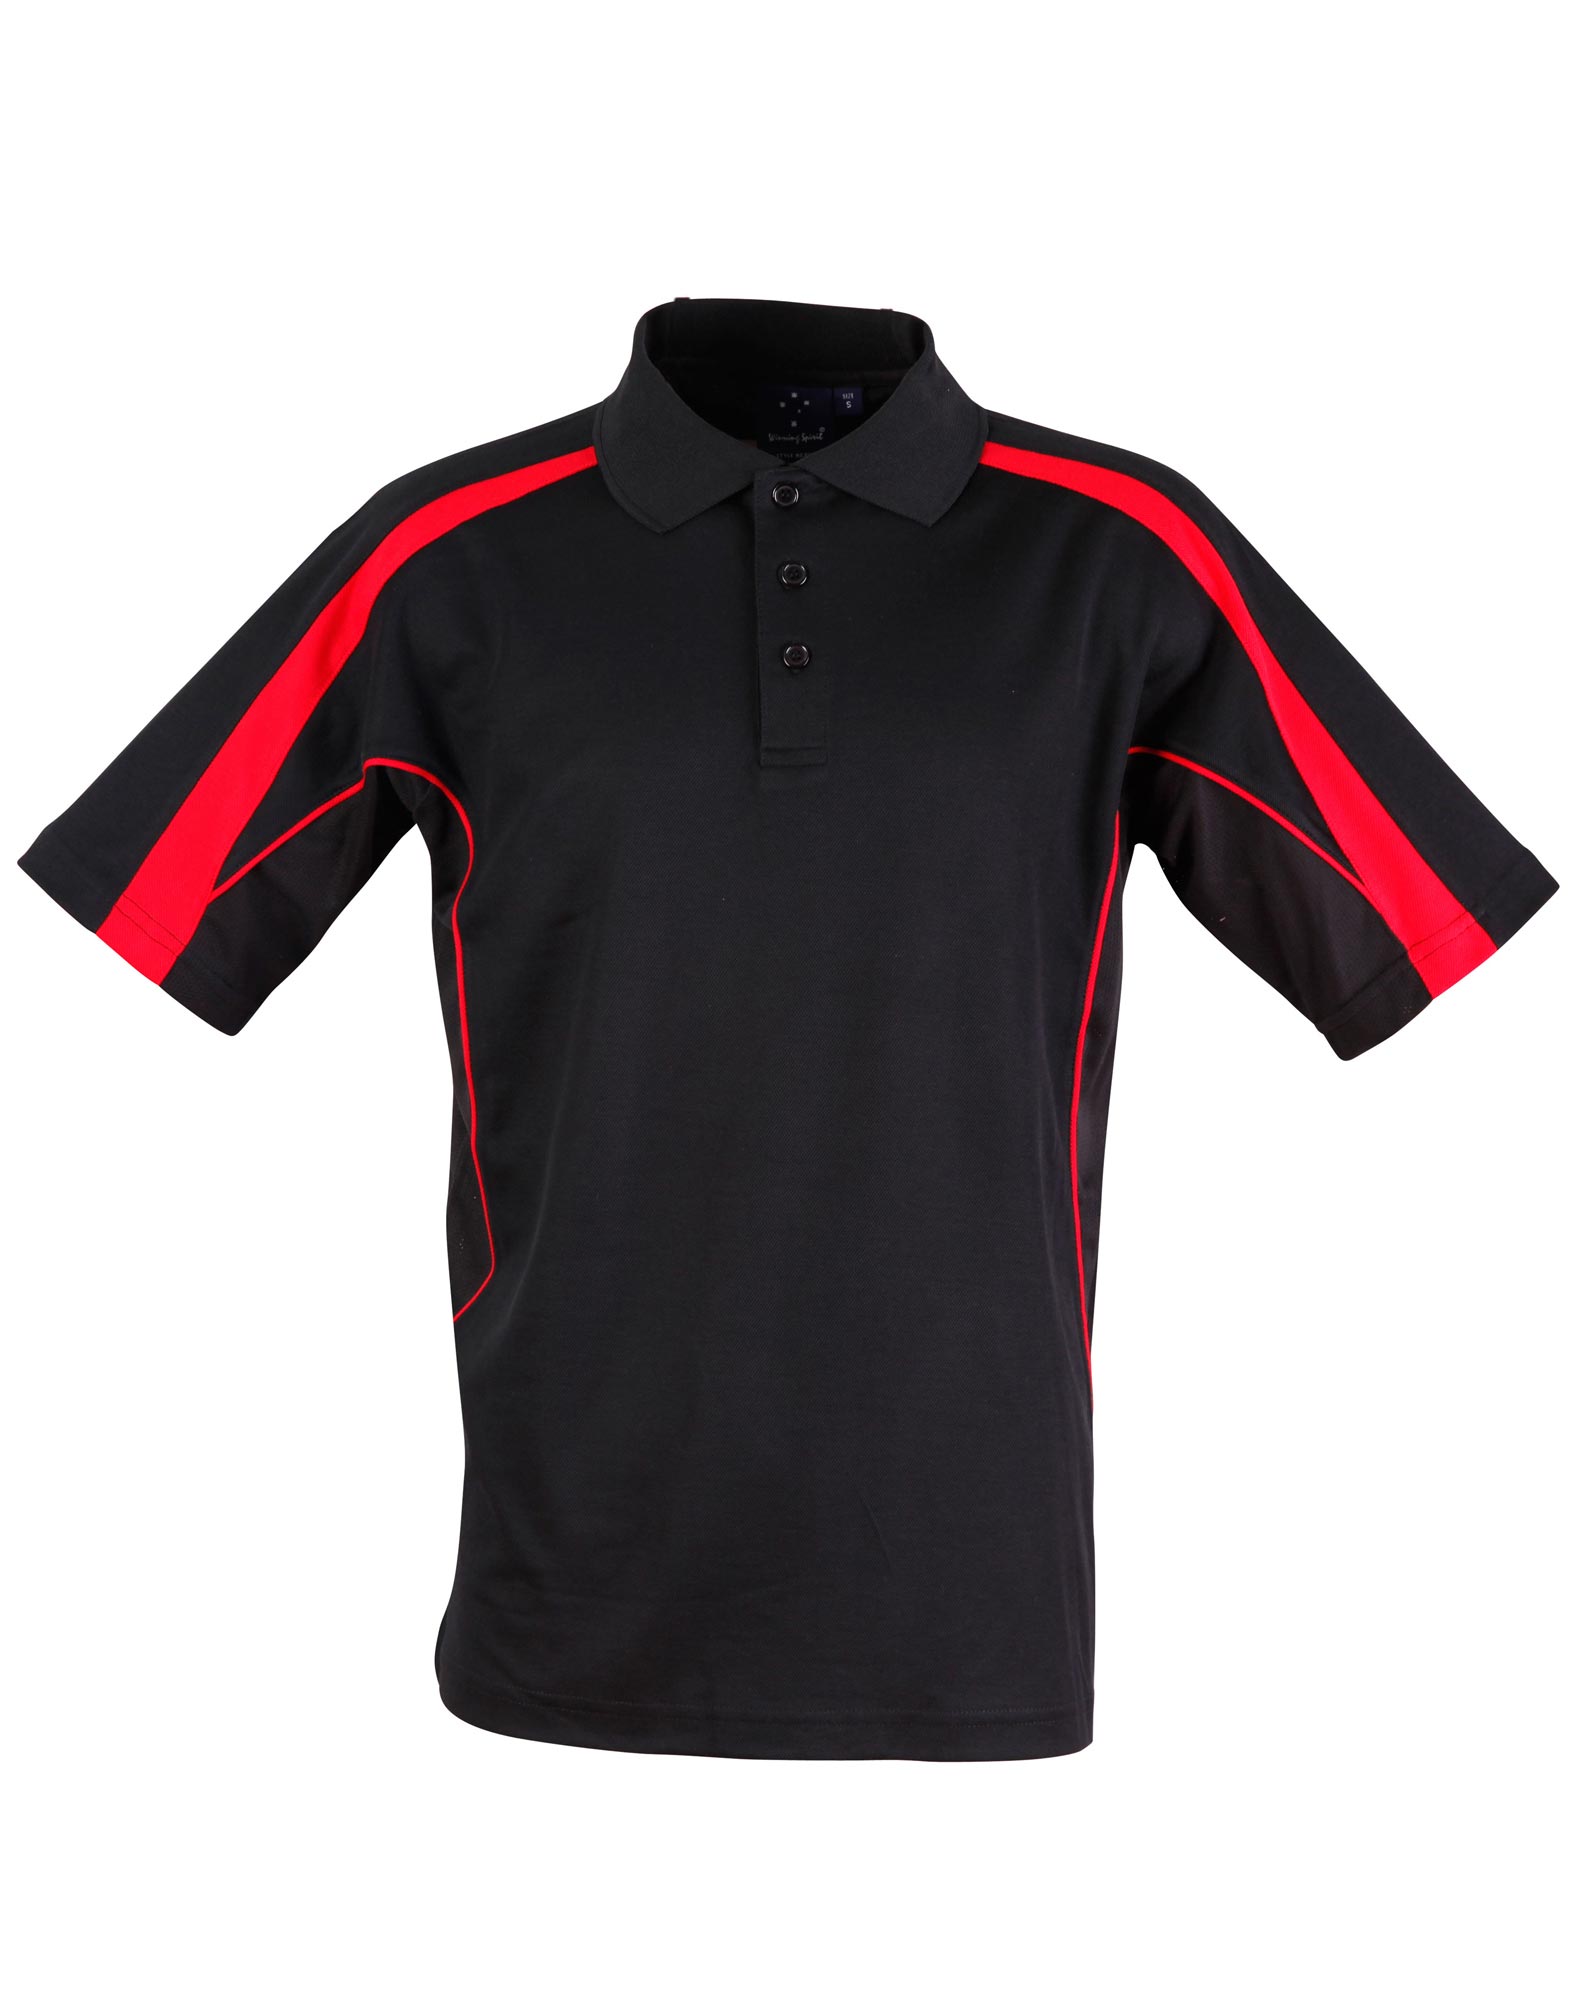 Custom (Red White) Legend Polo Shirts for Men Online Perth Australia